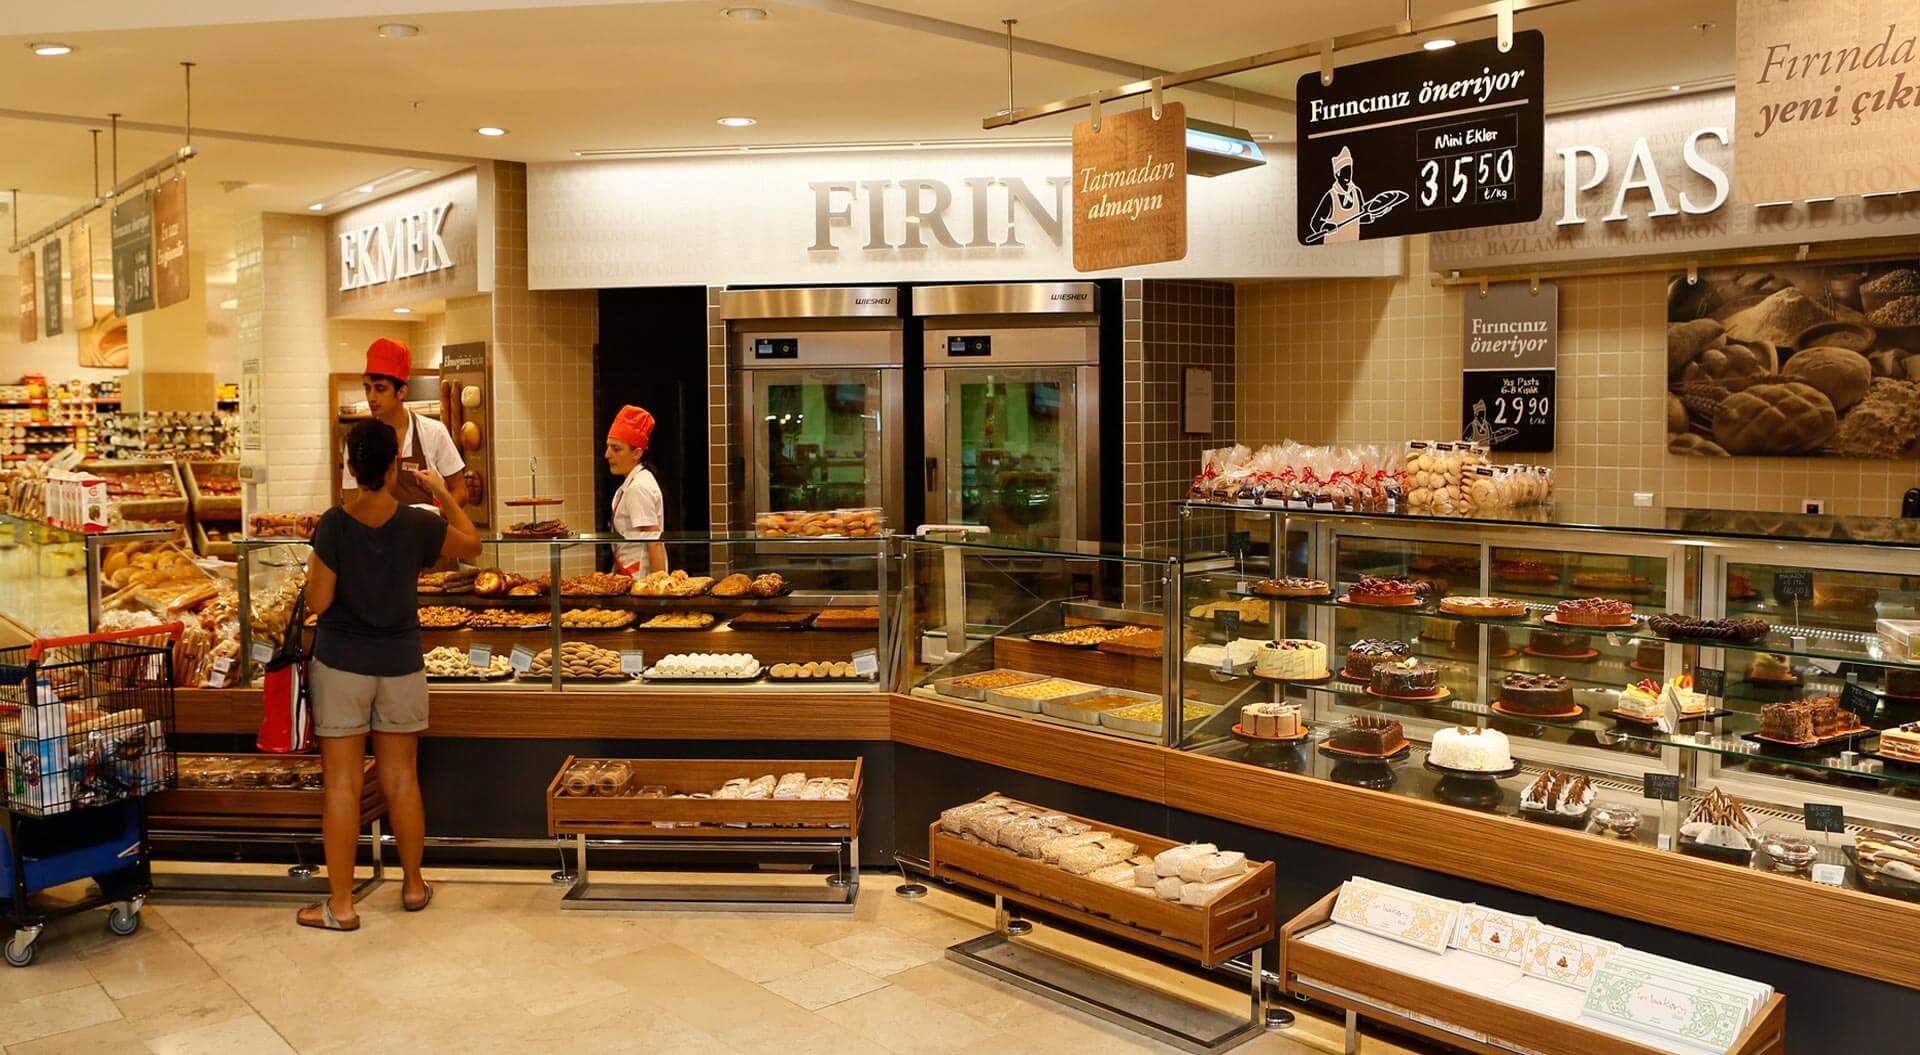 Migros Turkey supermarket bakery merchandising store design and internal brand communications